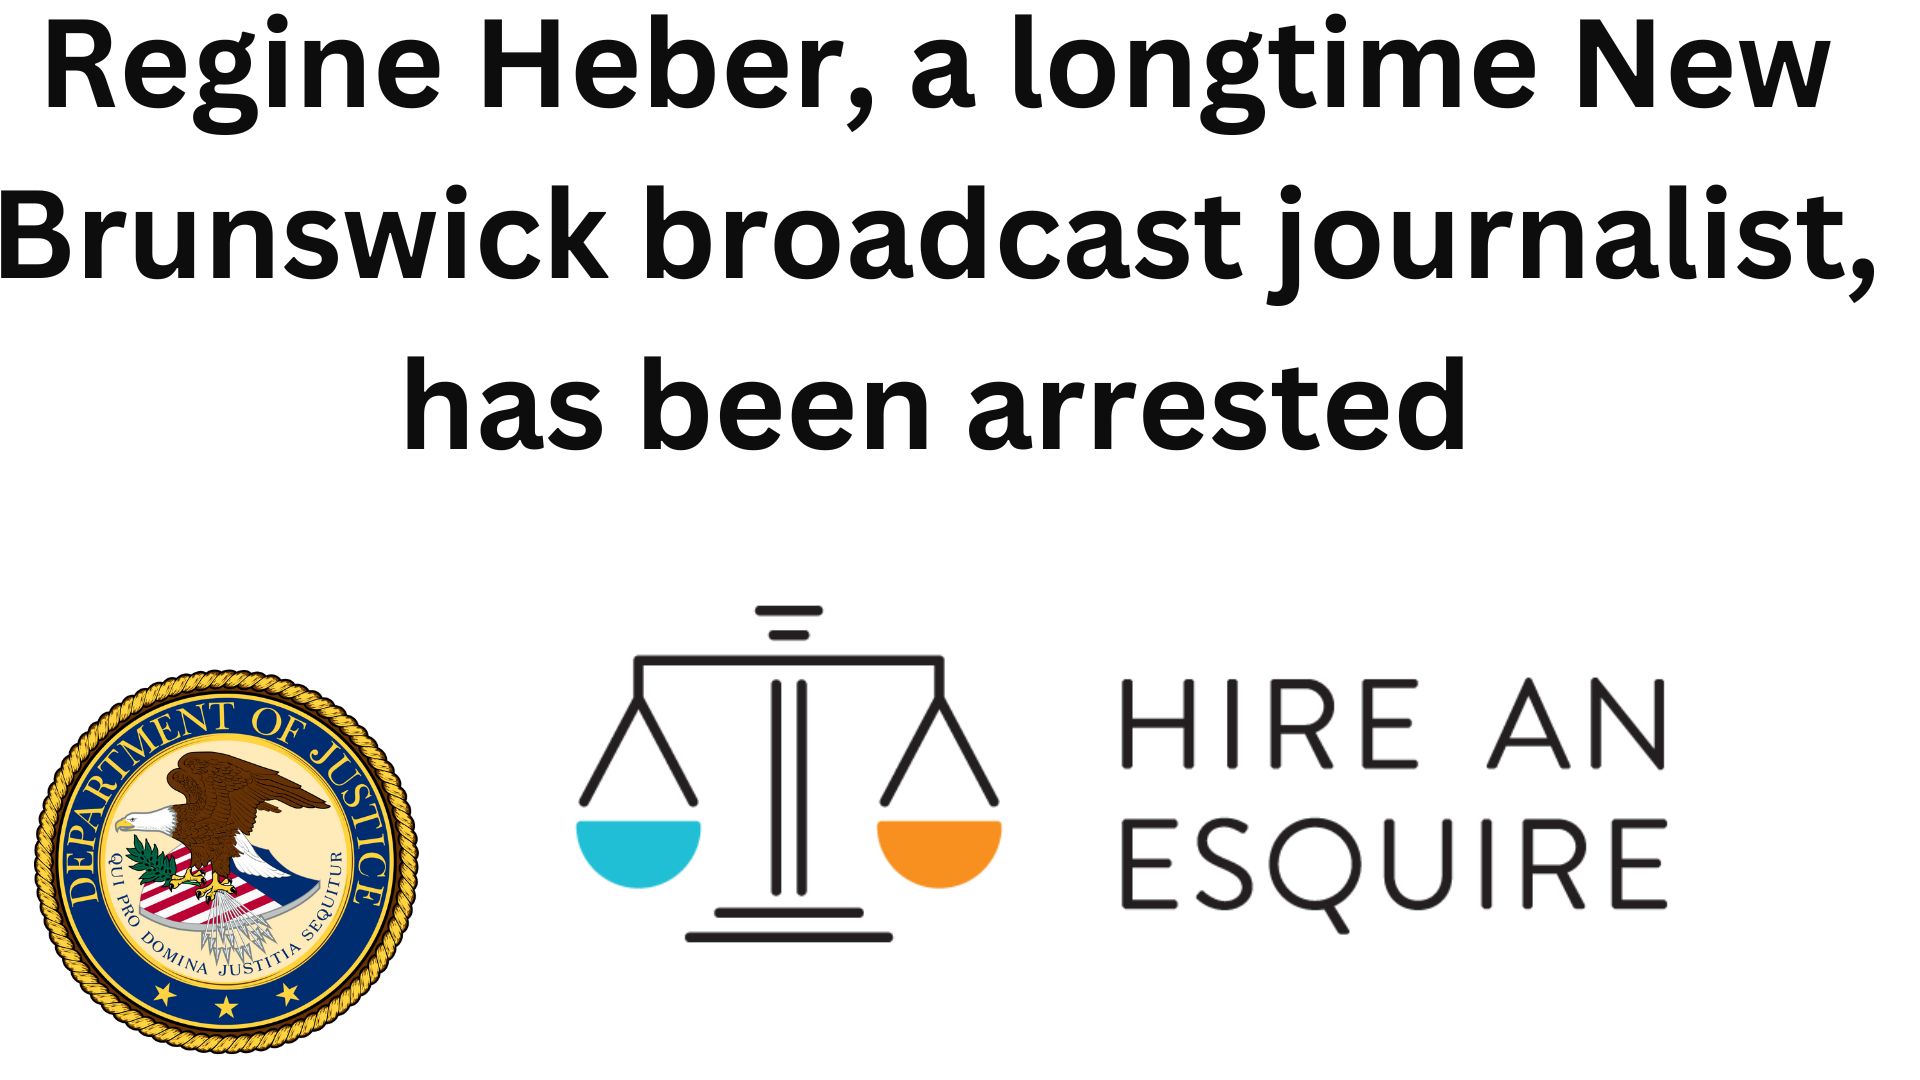 Regine heber, a longtime new brunswick broadcast journalist, has been arrested